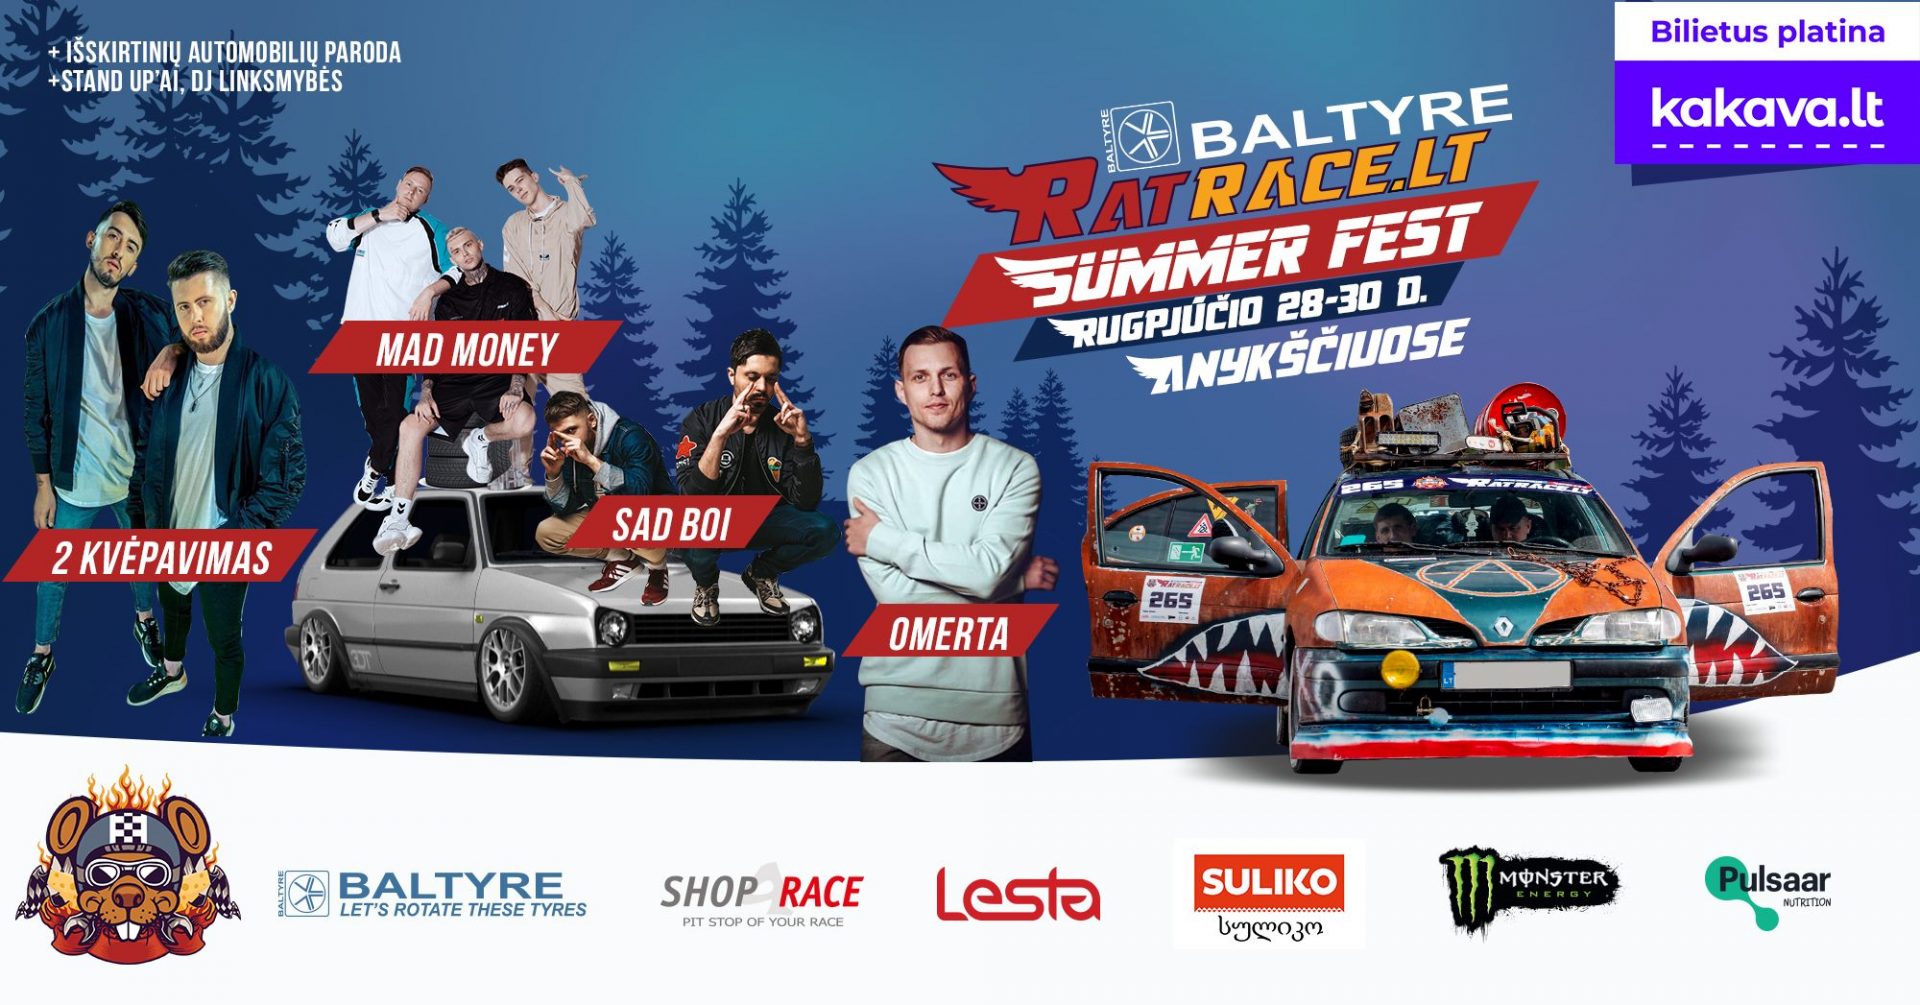 Baltyre RatRace.lt Summer Fest rugpjūčio 28-30